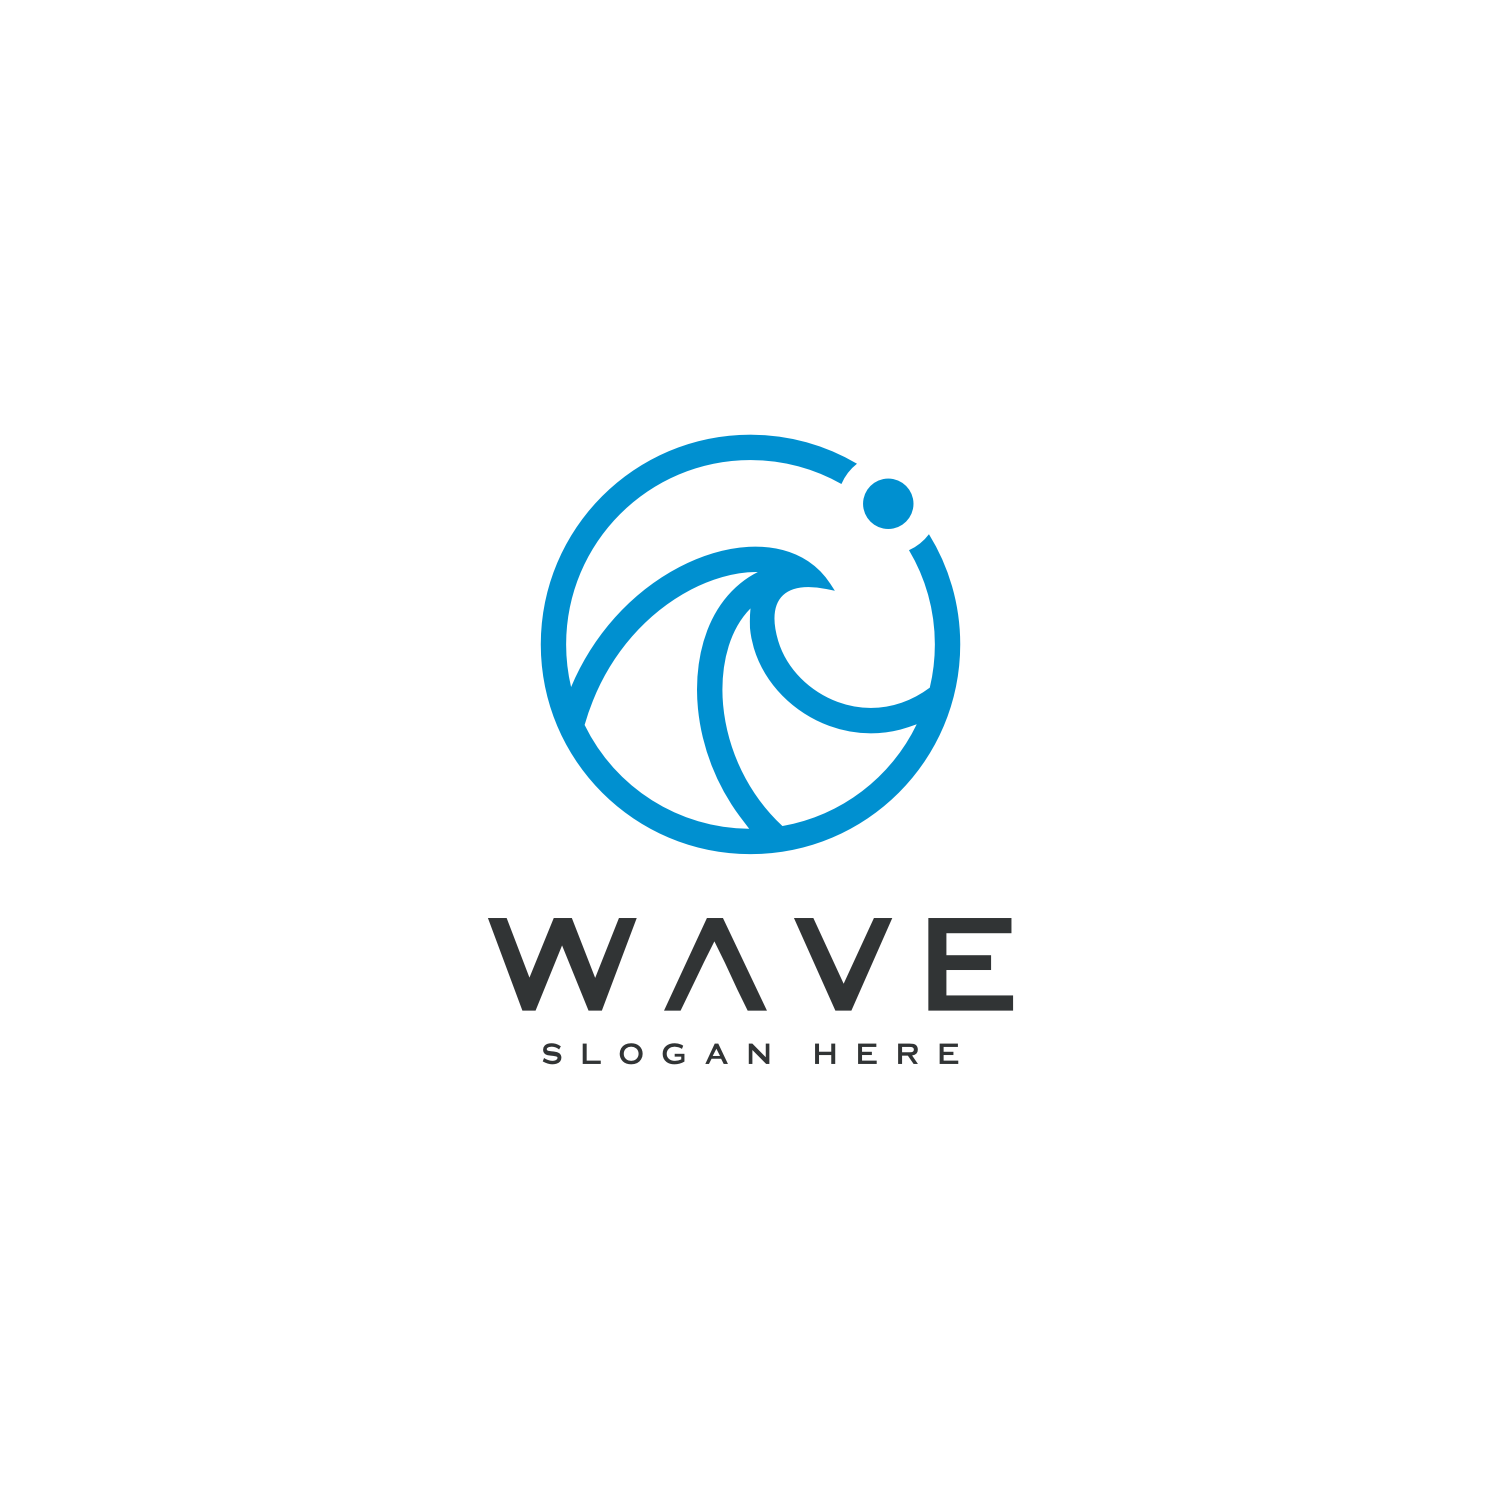 Ocean Wave Logo Vector Design cover image.